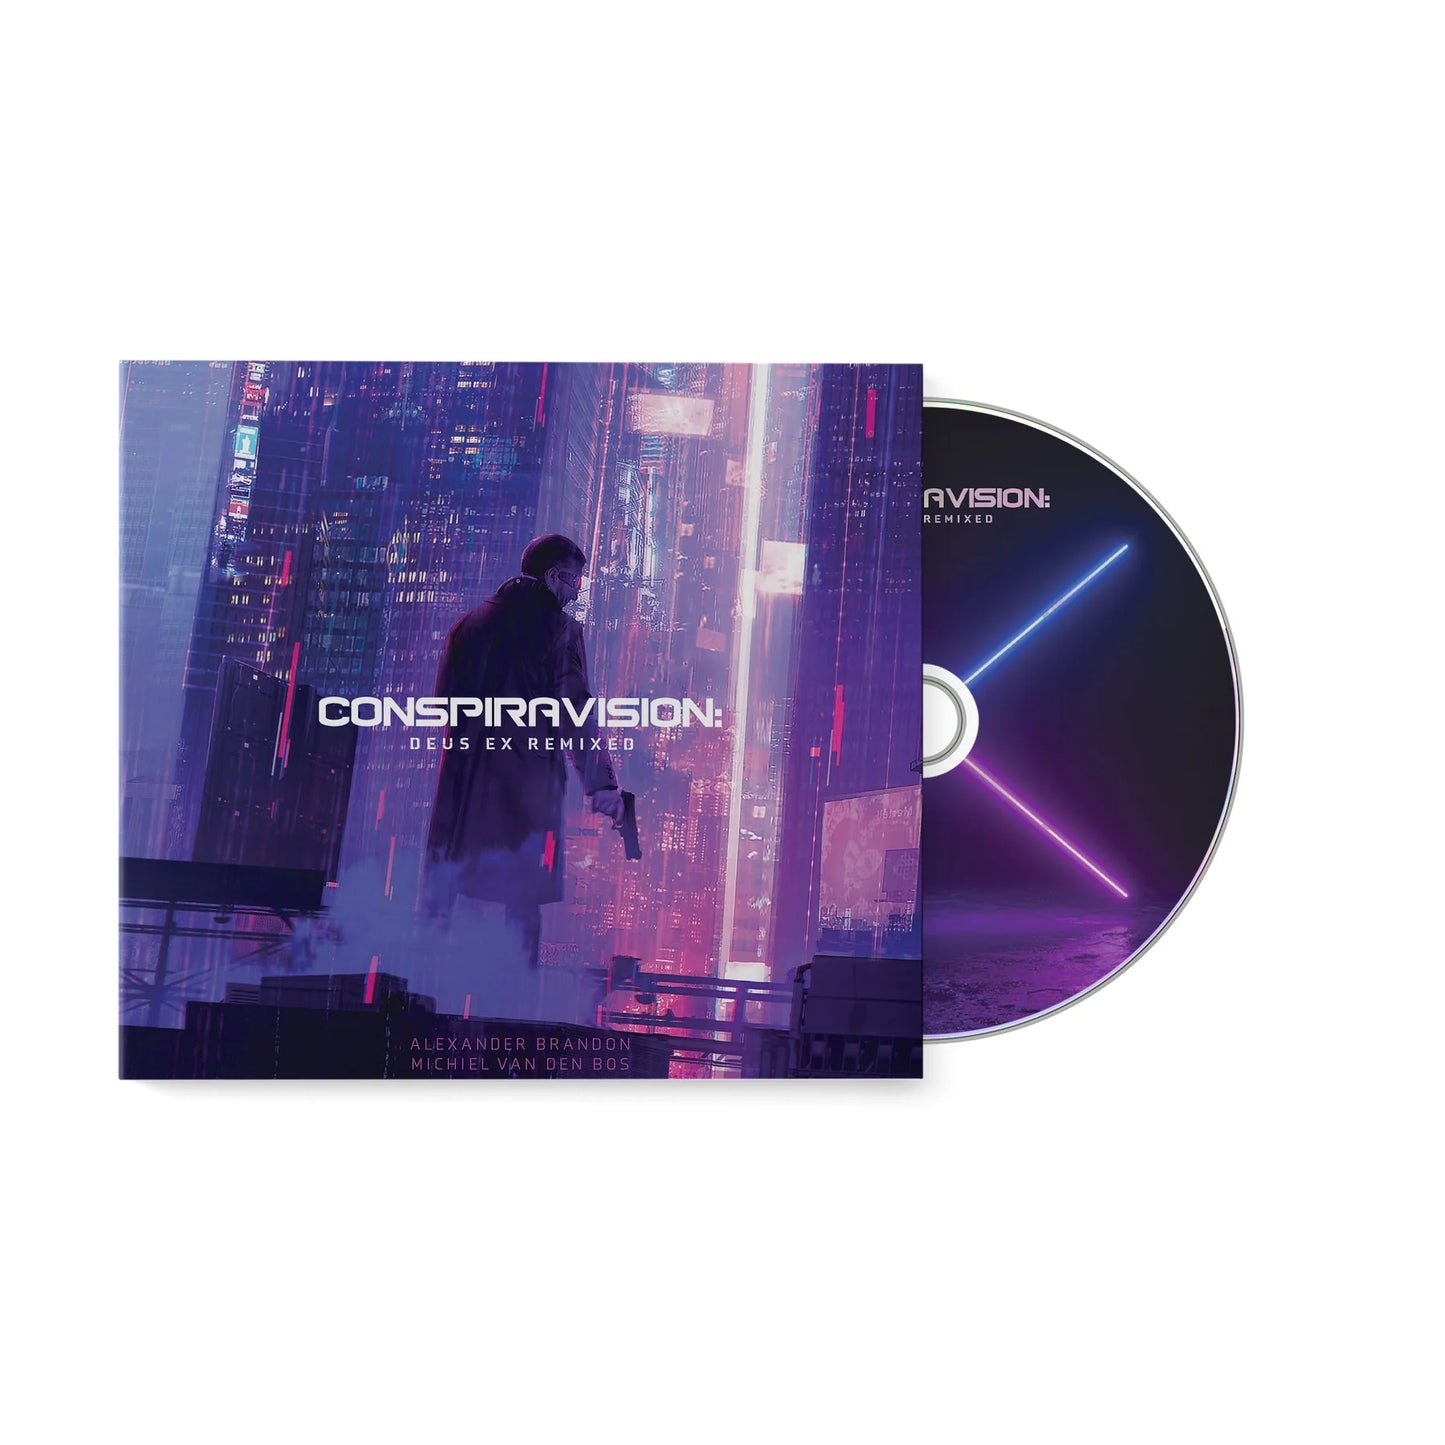 Conspiravision: Deus Ex Remixed - Alexander Brandon & Michiel van den Bos (Compact Disc)